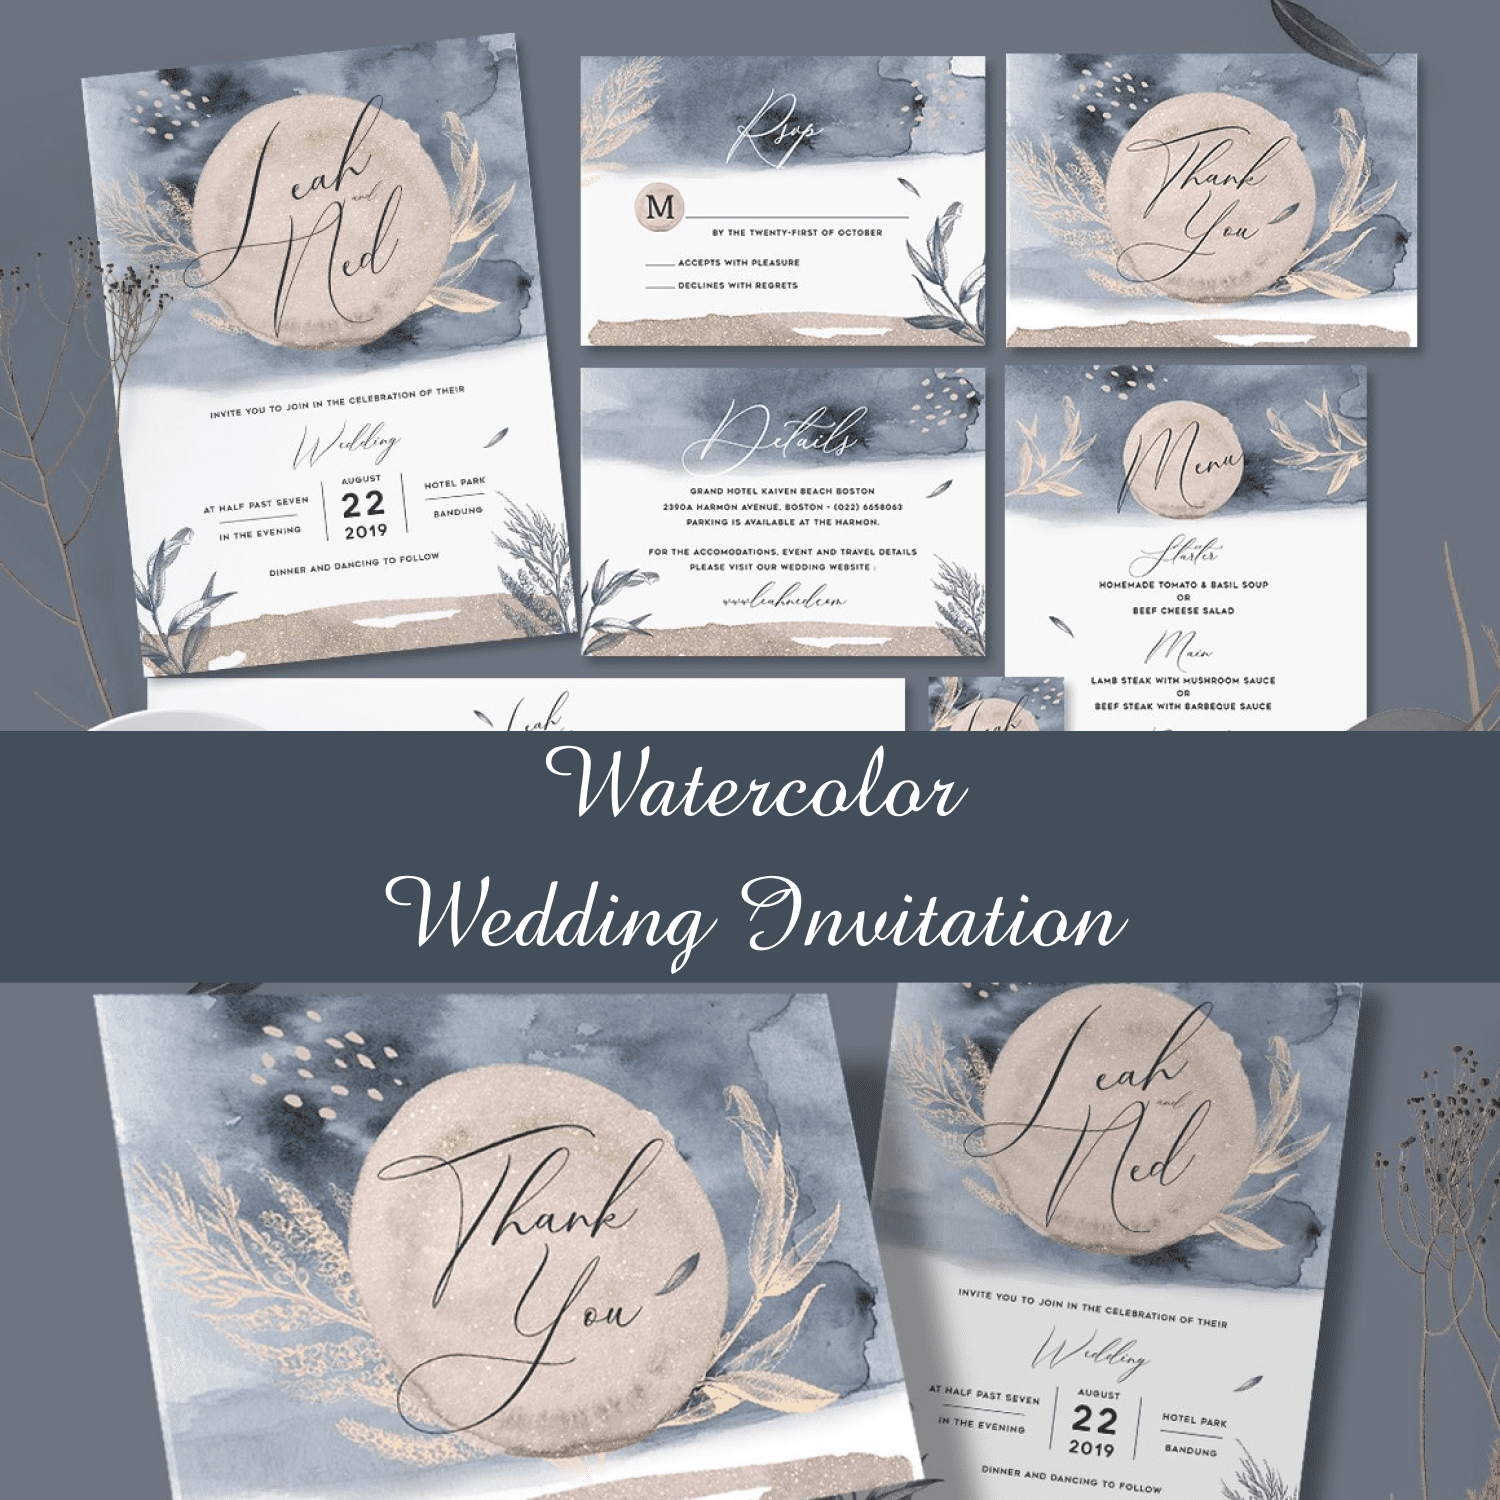 Watercolor Wedding Invitation preview 1500x1500 1